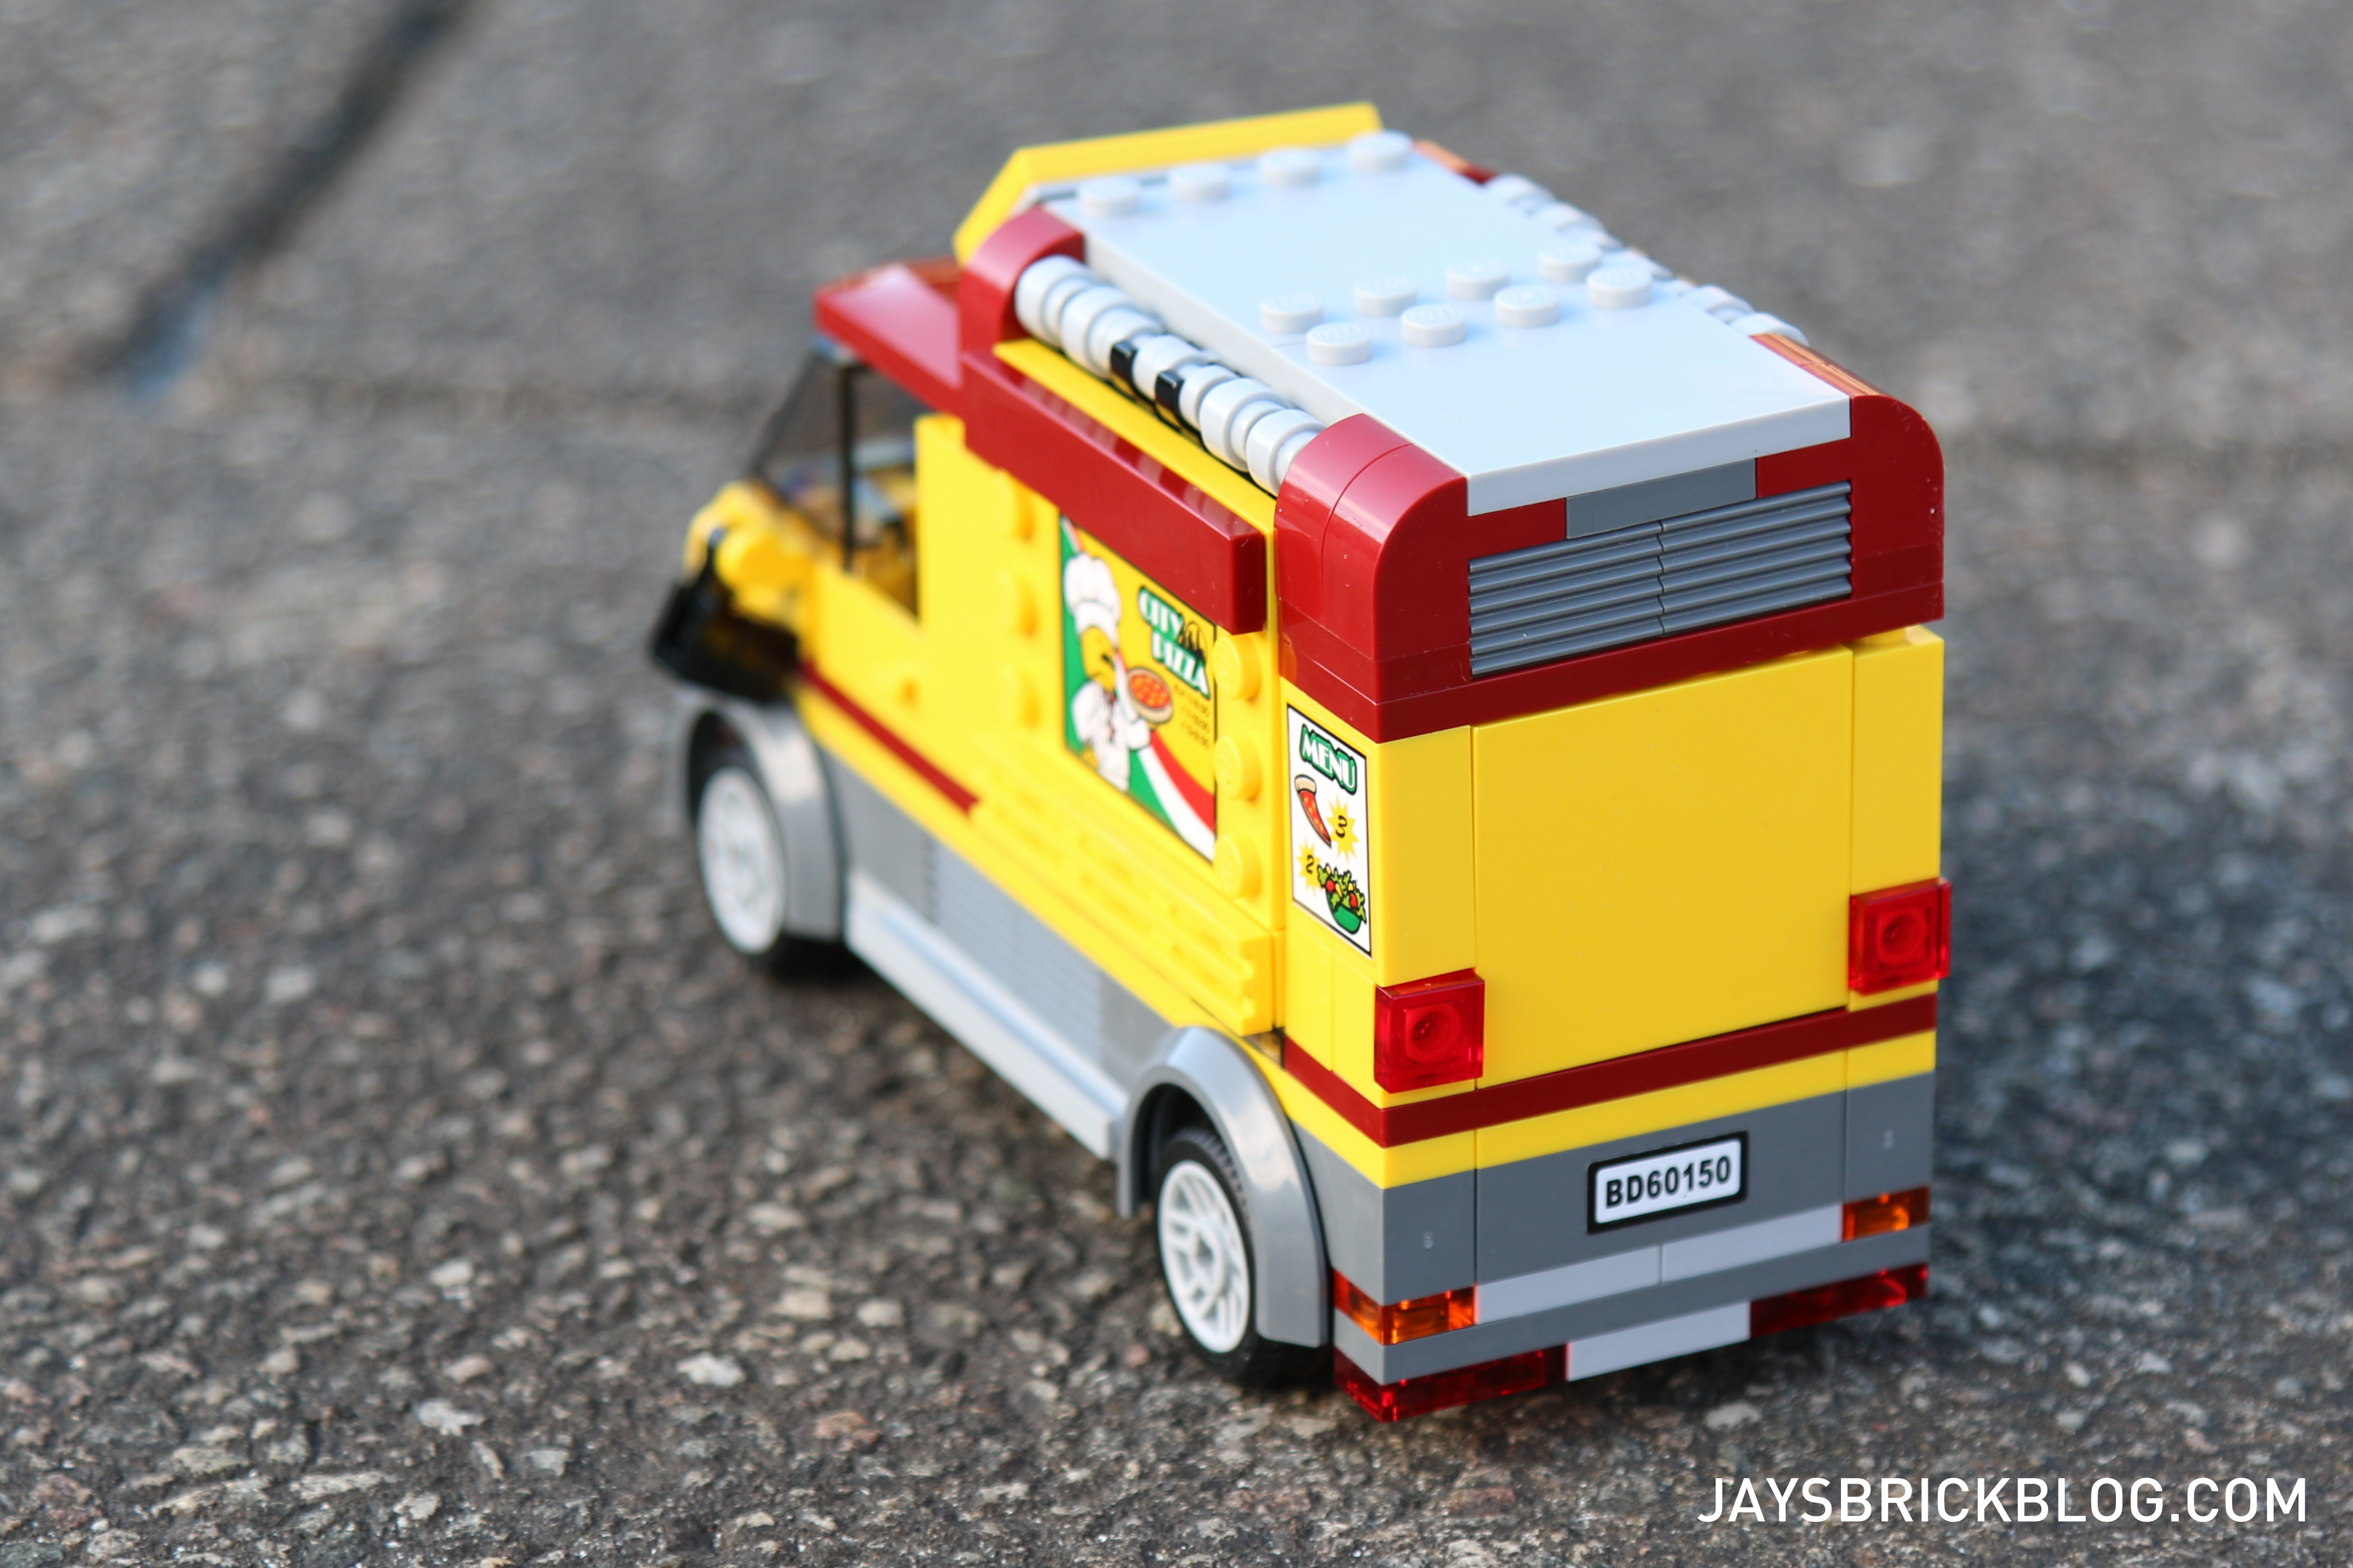 Review: LEGO 60150 Pizza Van - Jay's 